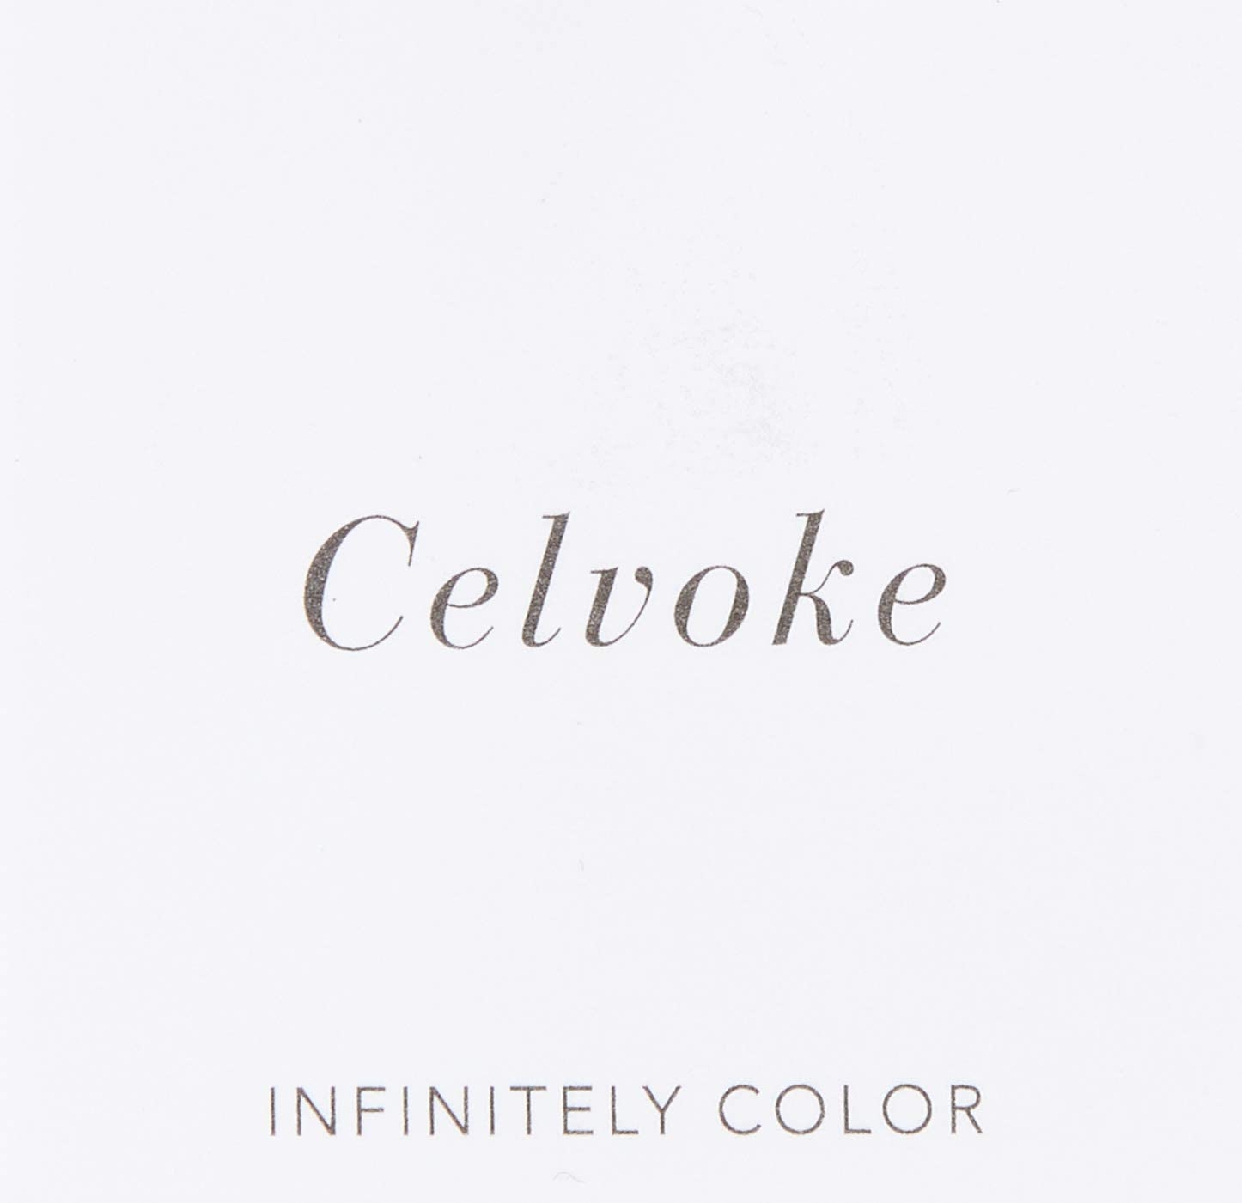 Celvoke(セルヴォーク) インフィニトリー カラーの商品画像2 